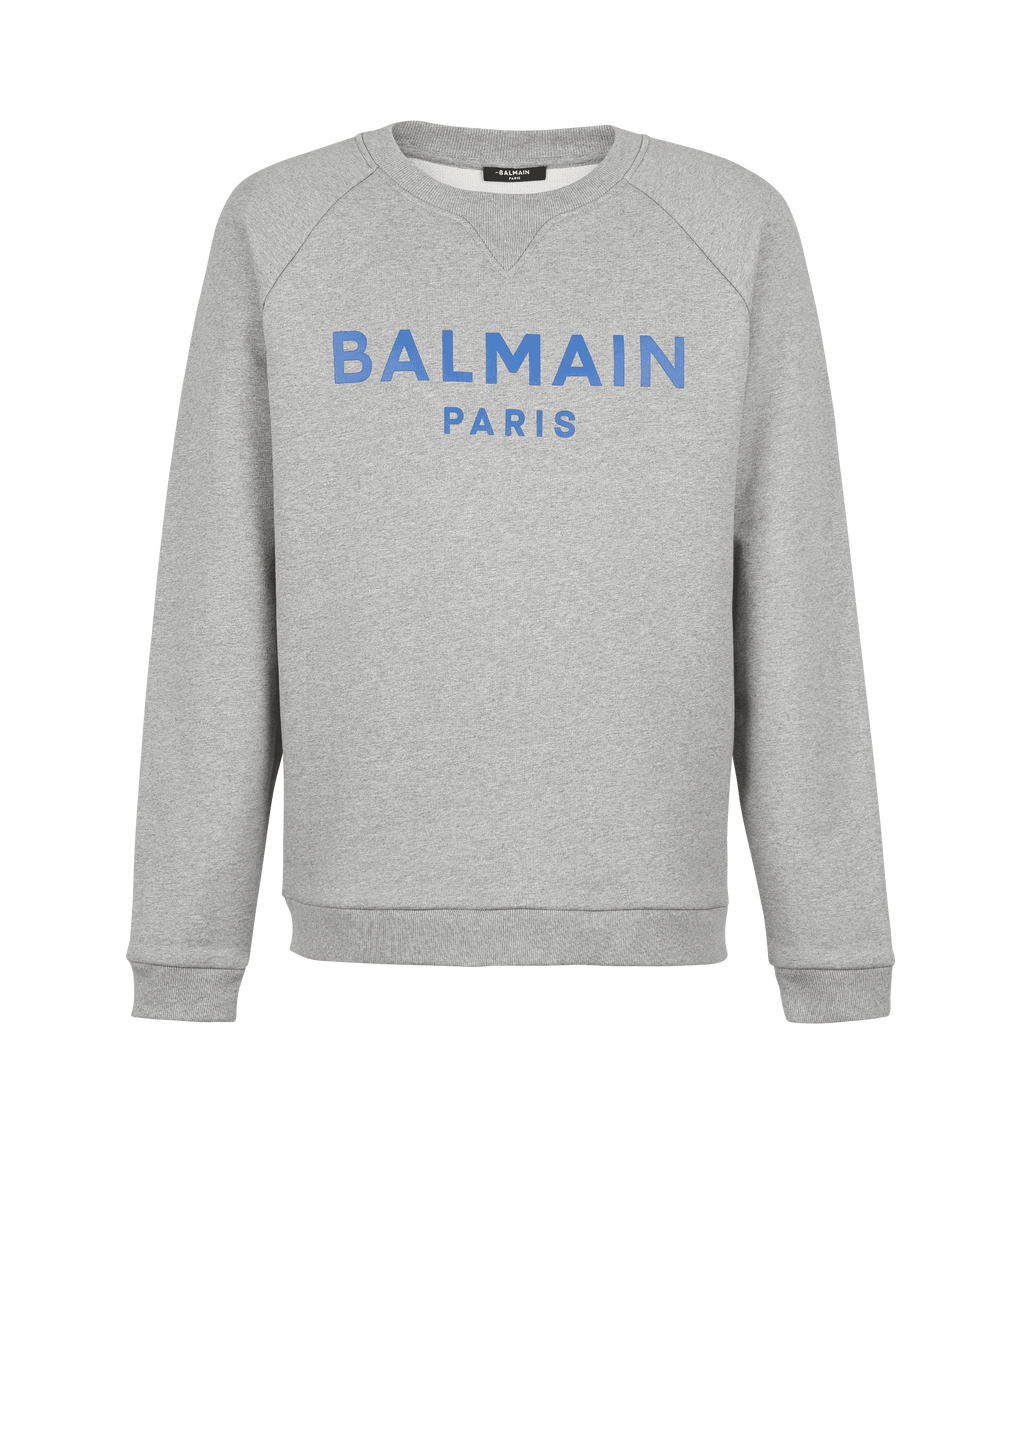 Cotton sweatshirt with Balmain Paris logo print, grey, hi-res